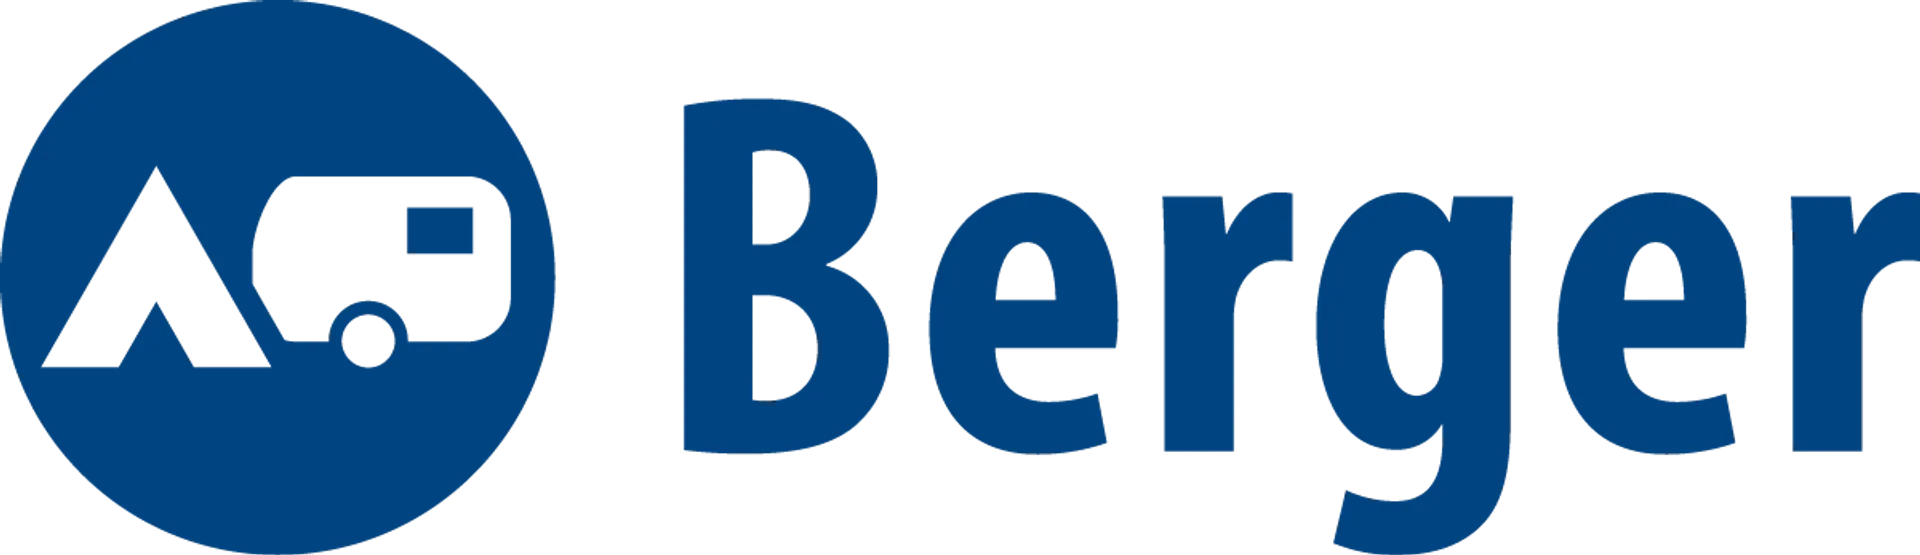 FRITZ BERGER logo